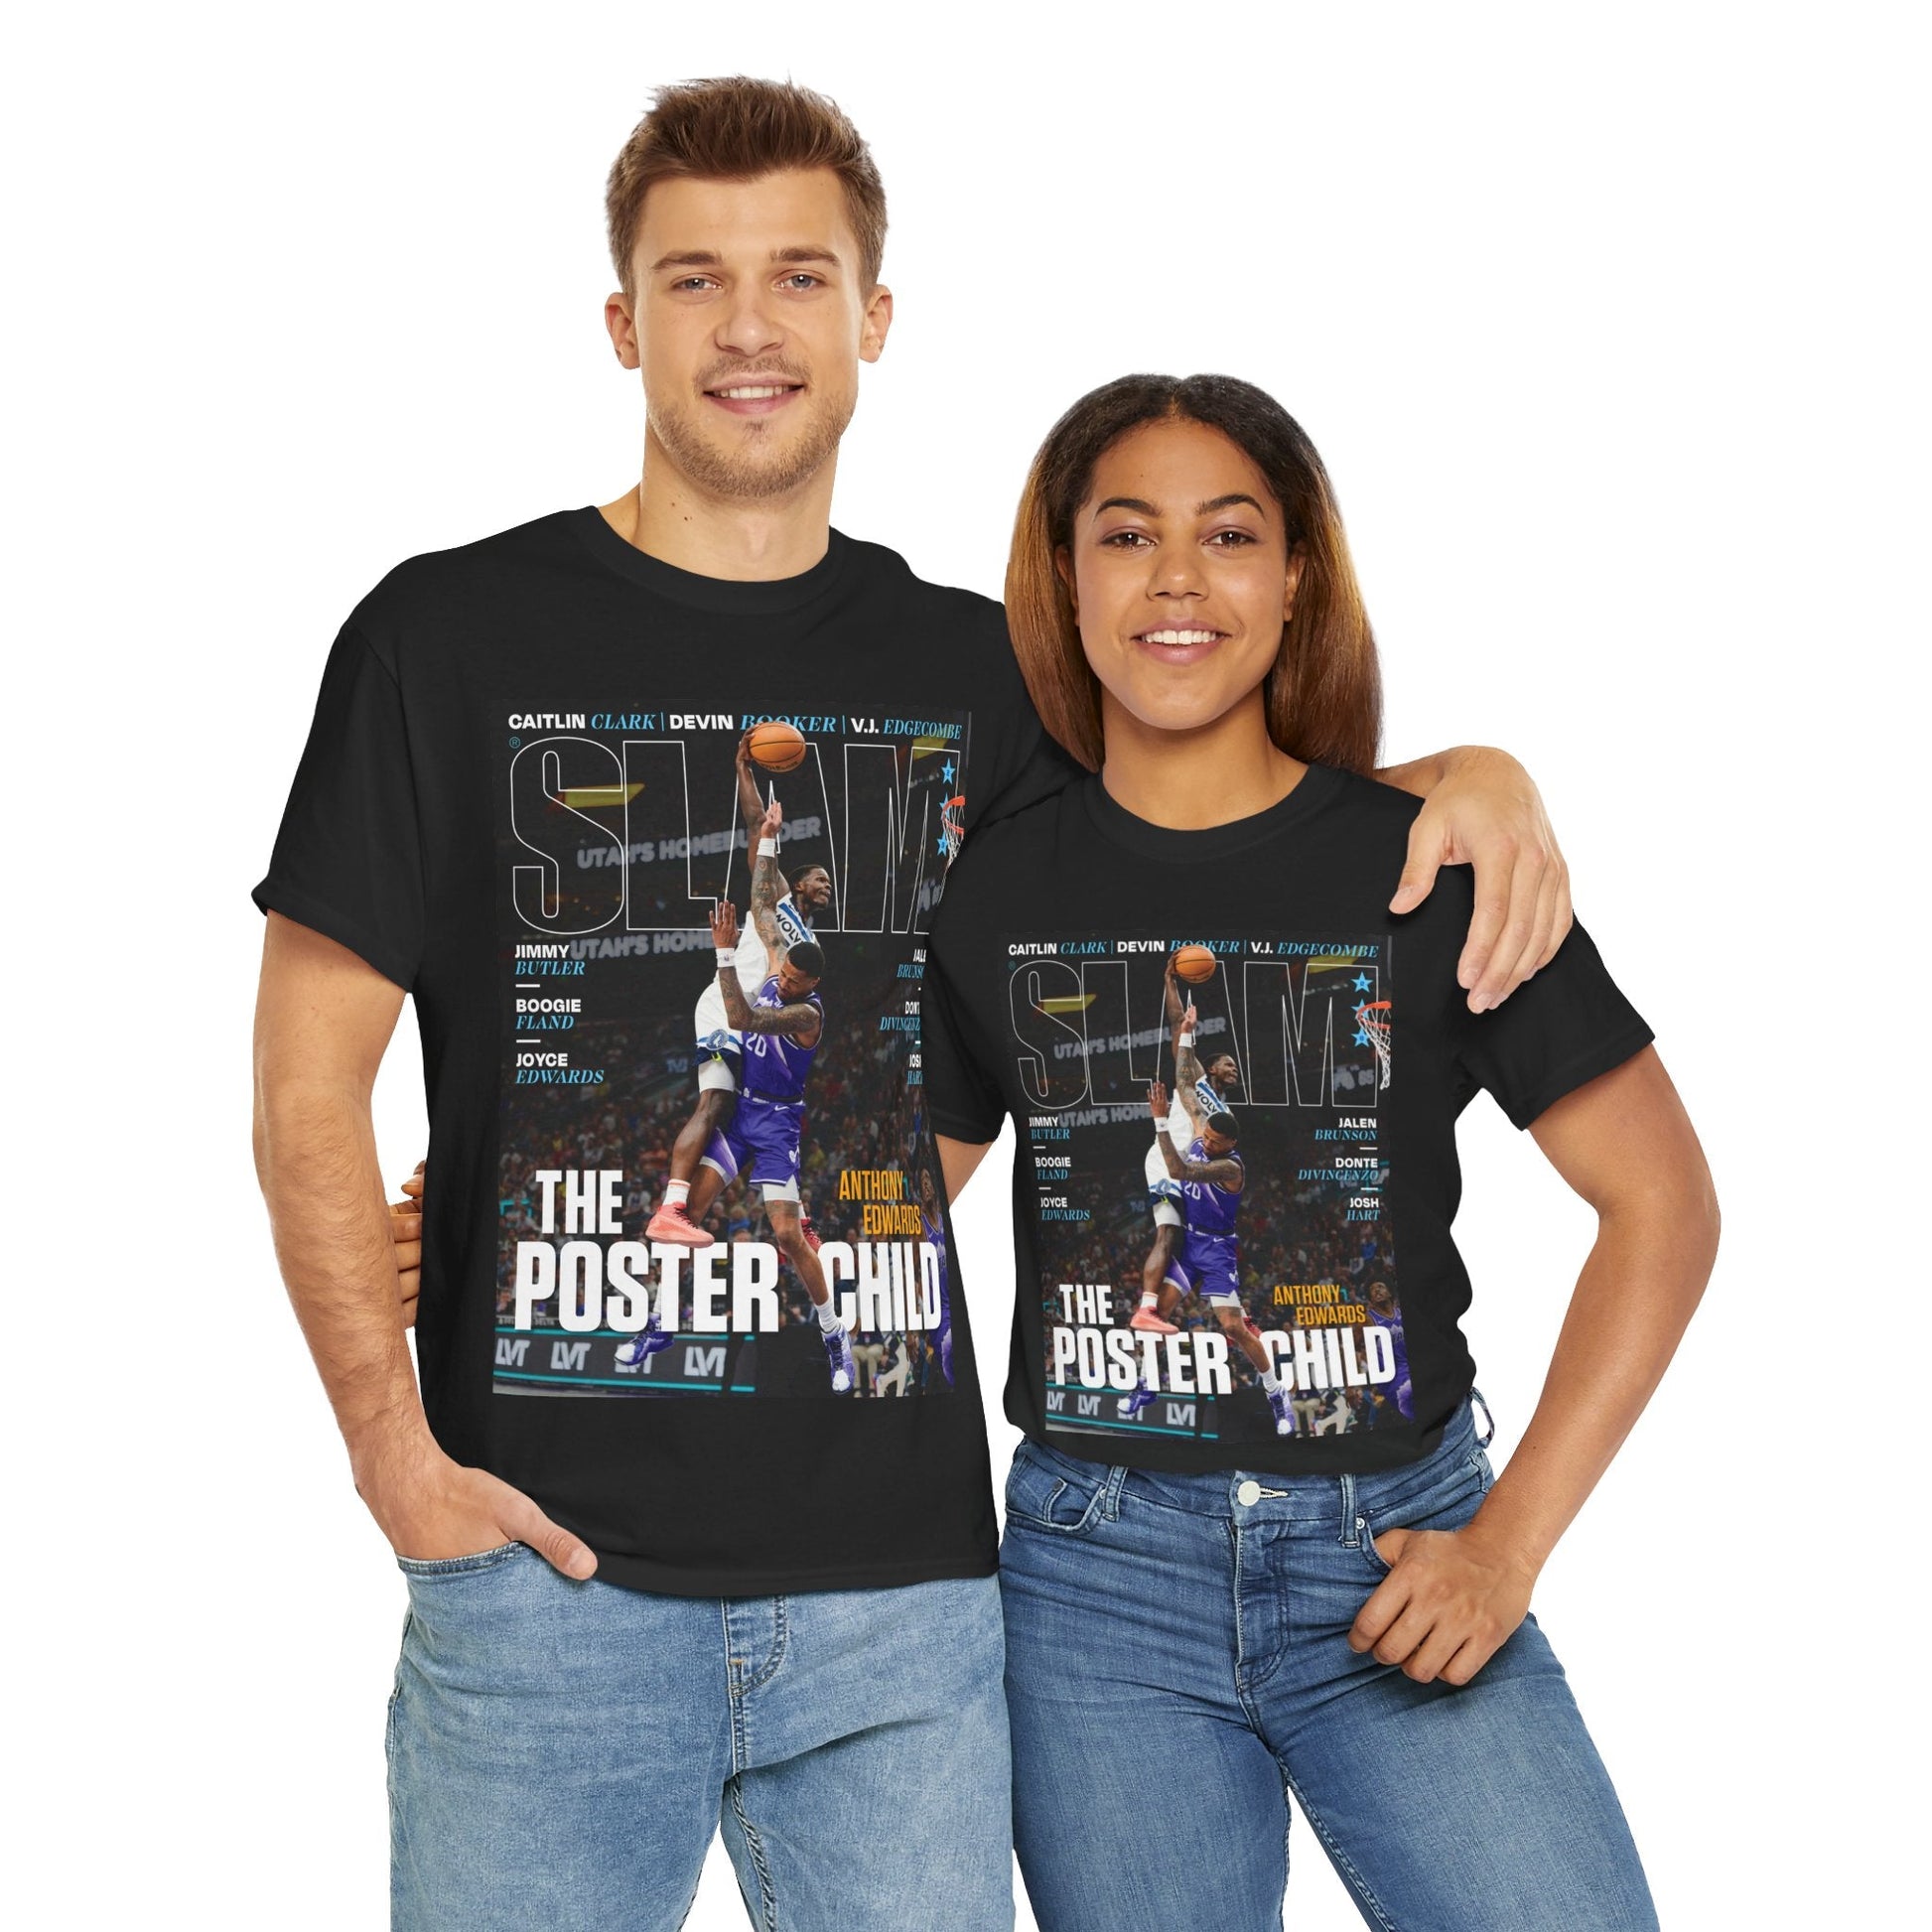 Anthony Edwards Minnesota Timberwolves NBA Slam Cover T-Shirt - RetroTeeShop